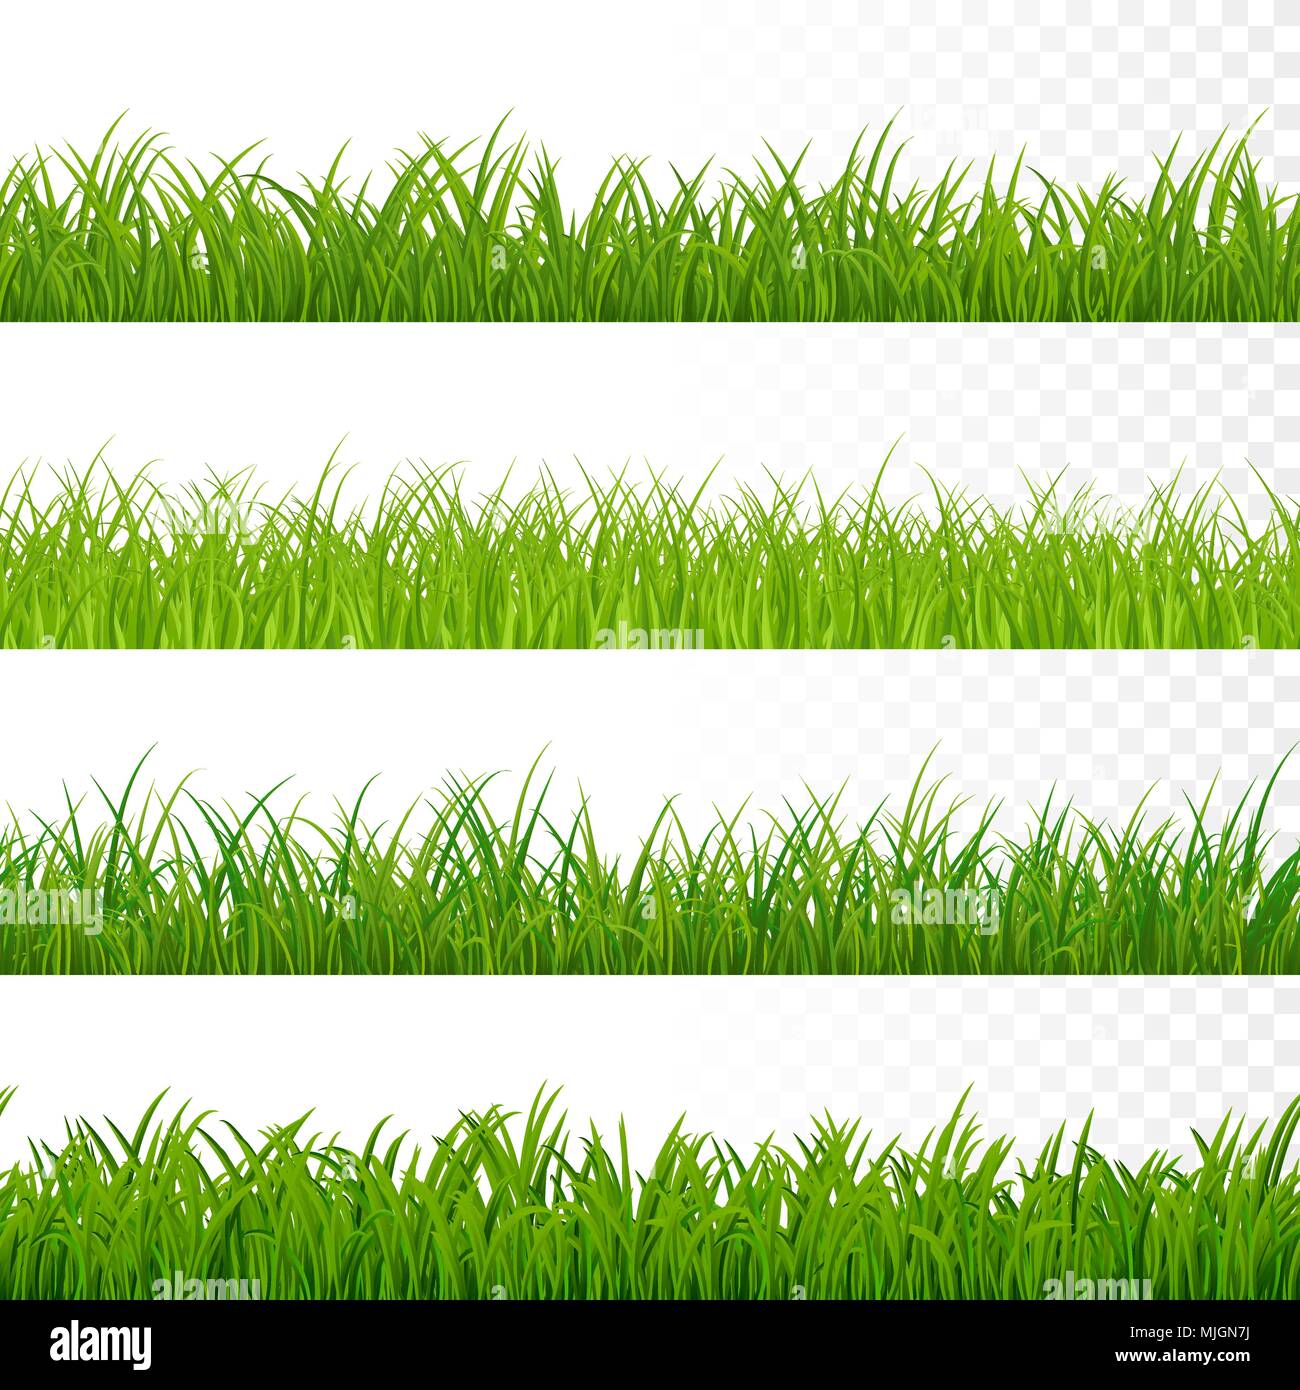 Seamless gorisontal grass border. Green grass pattern. Grass texture elements. Vector illustration isolated on white Stock Vector